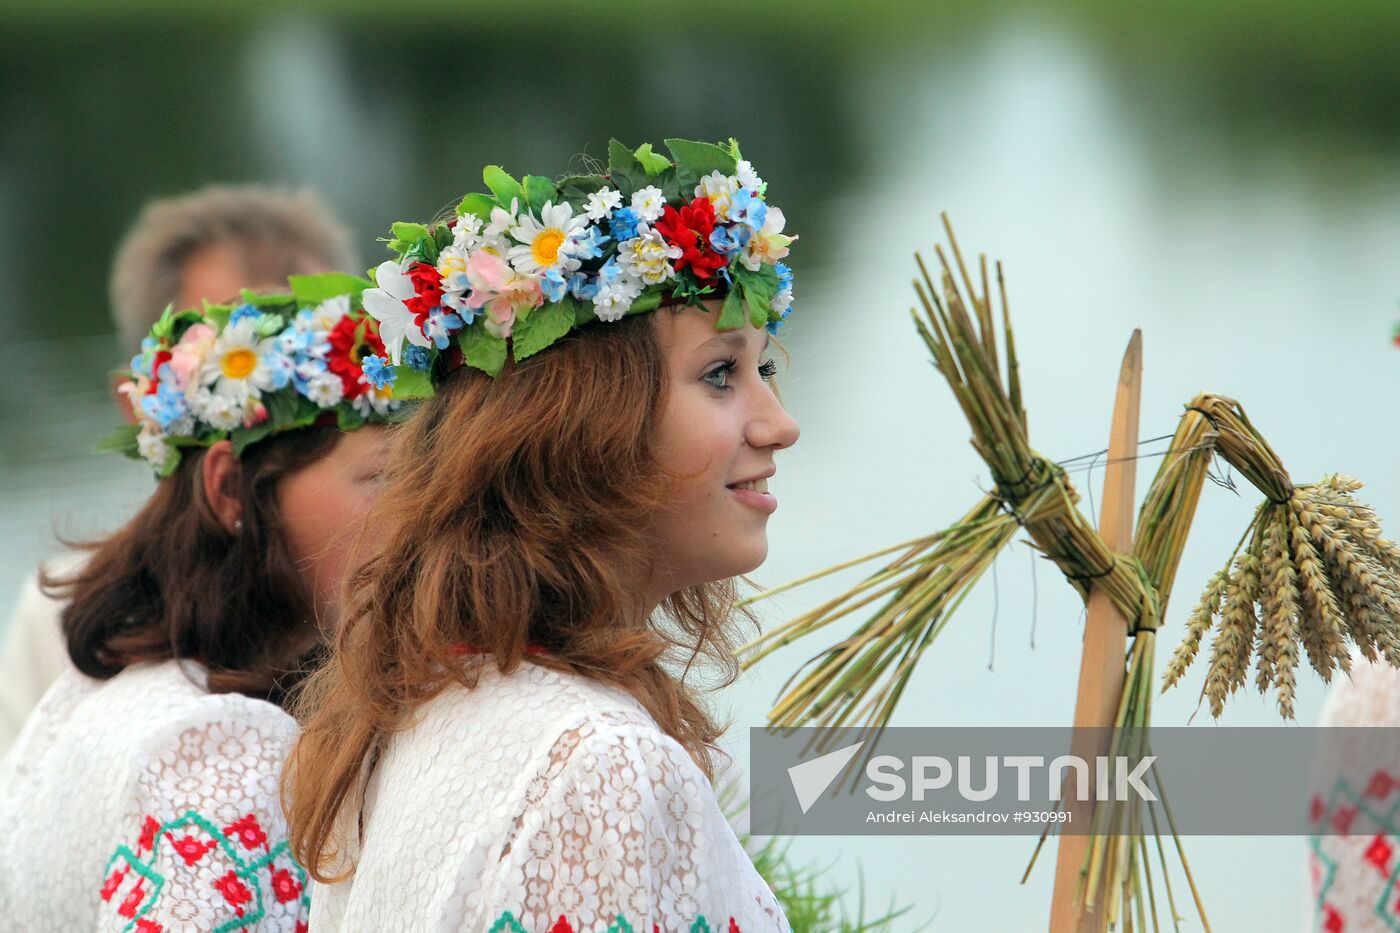 Celebration of Ivan Kupala Day